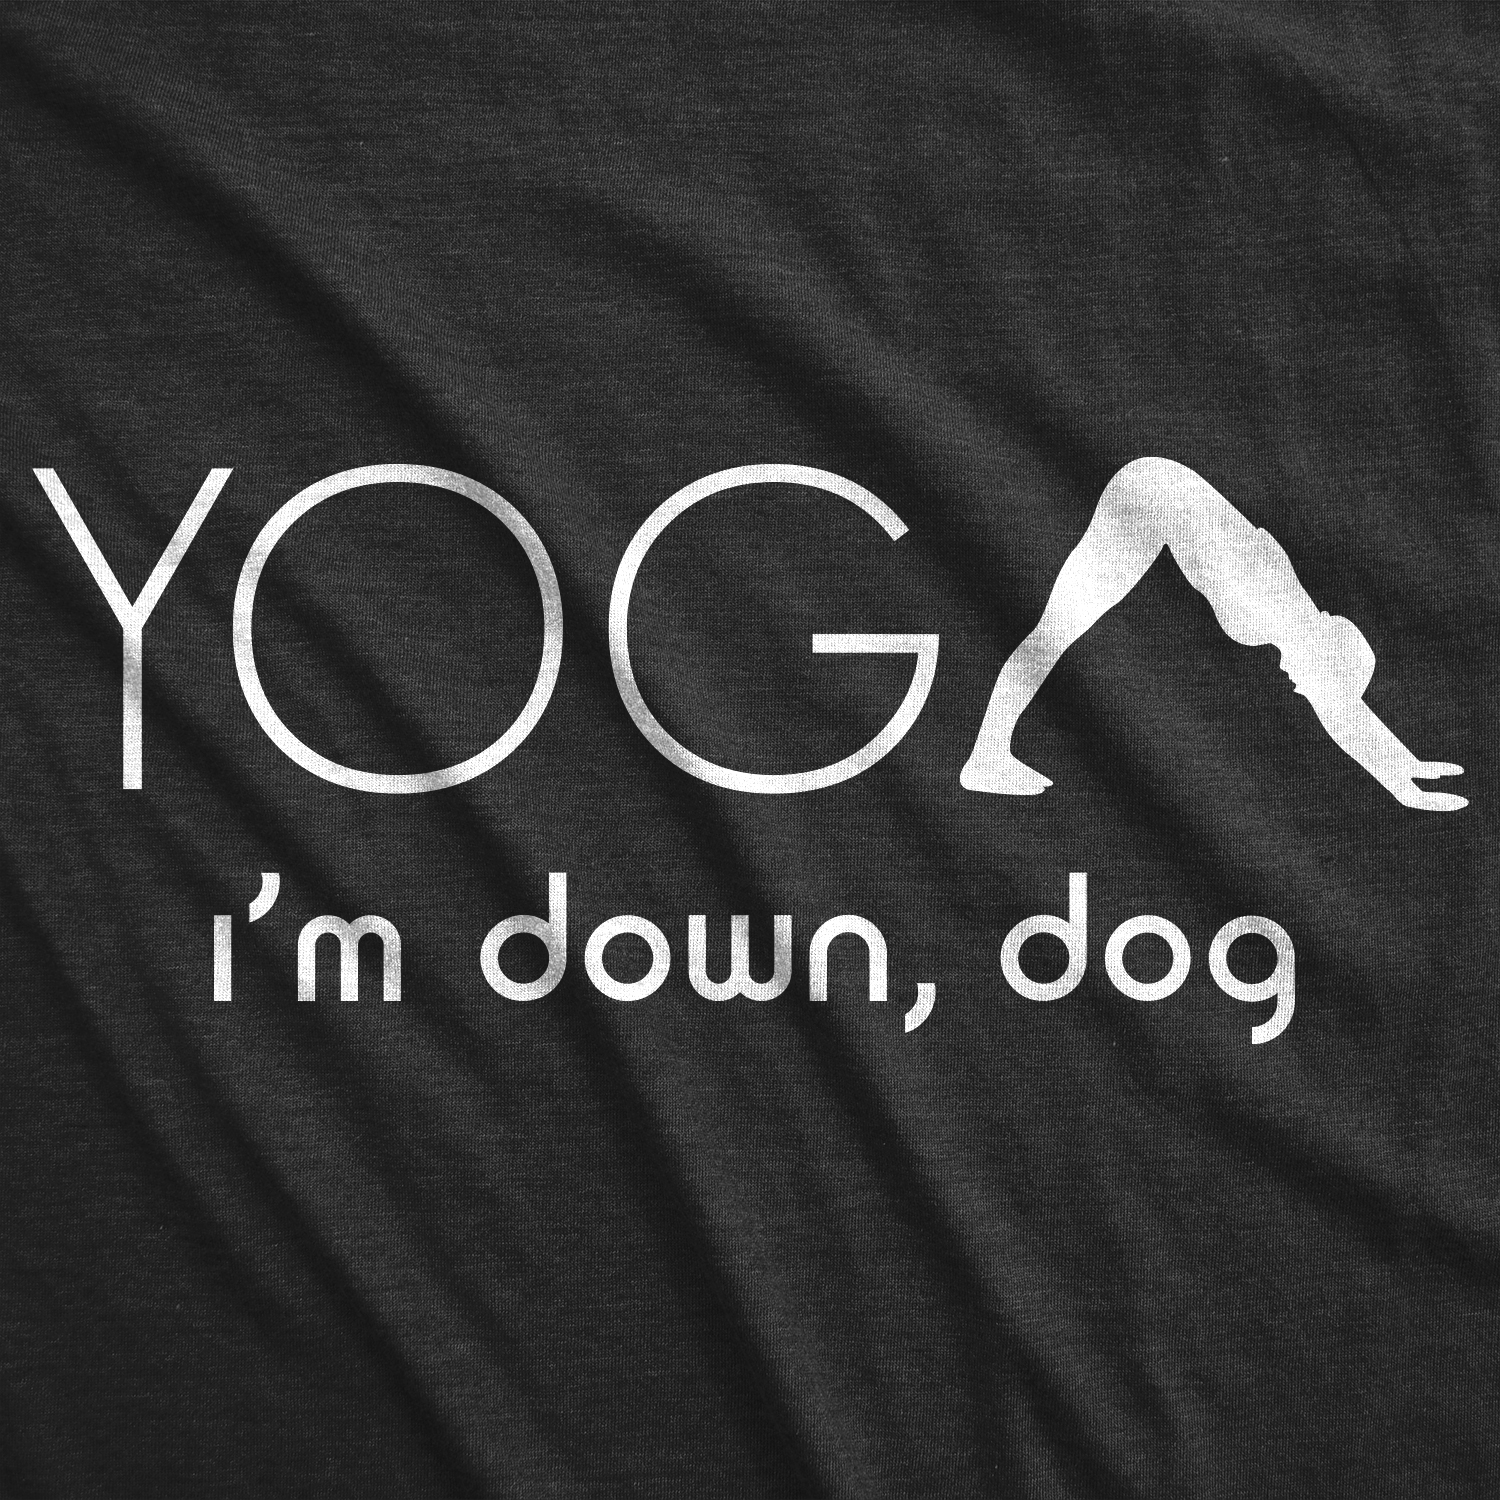 019-yoga-im-down-dog_detail-hblk